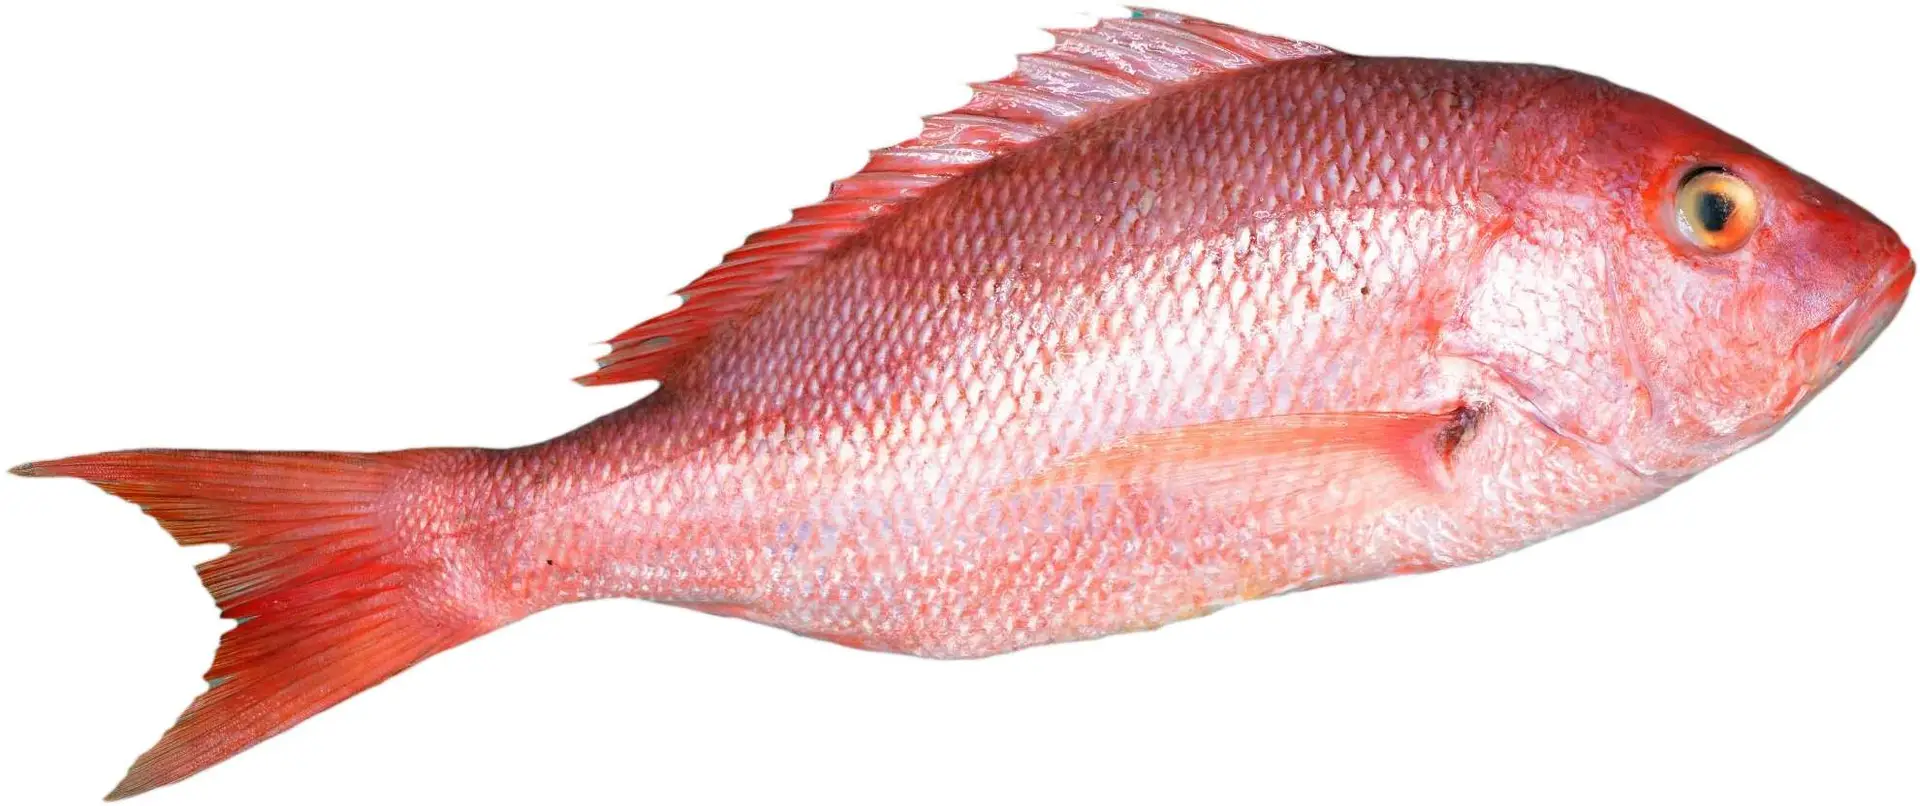 Live & Frozen Premium Seafood Exporter - Red Snapper - Indoseas